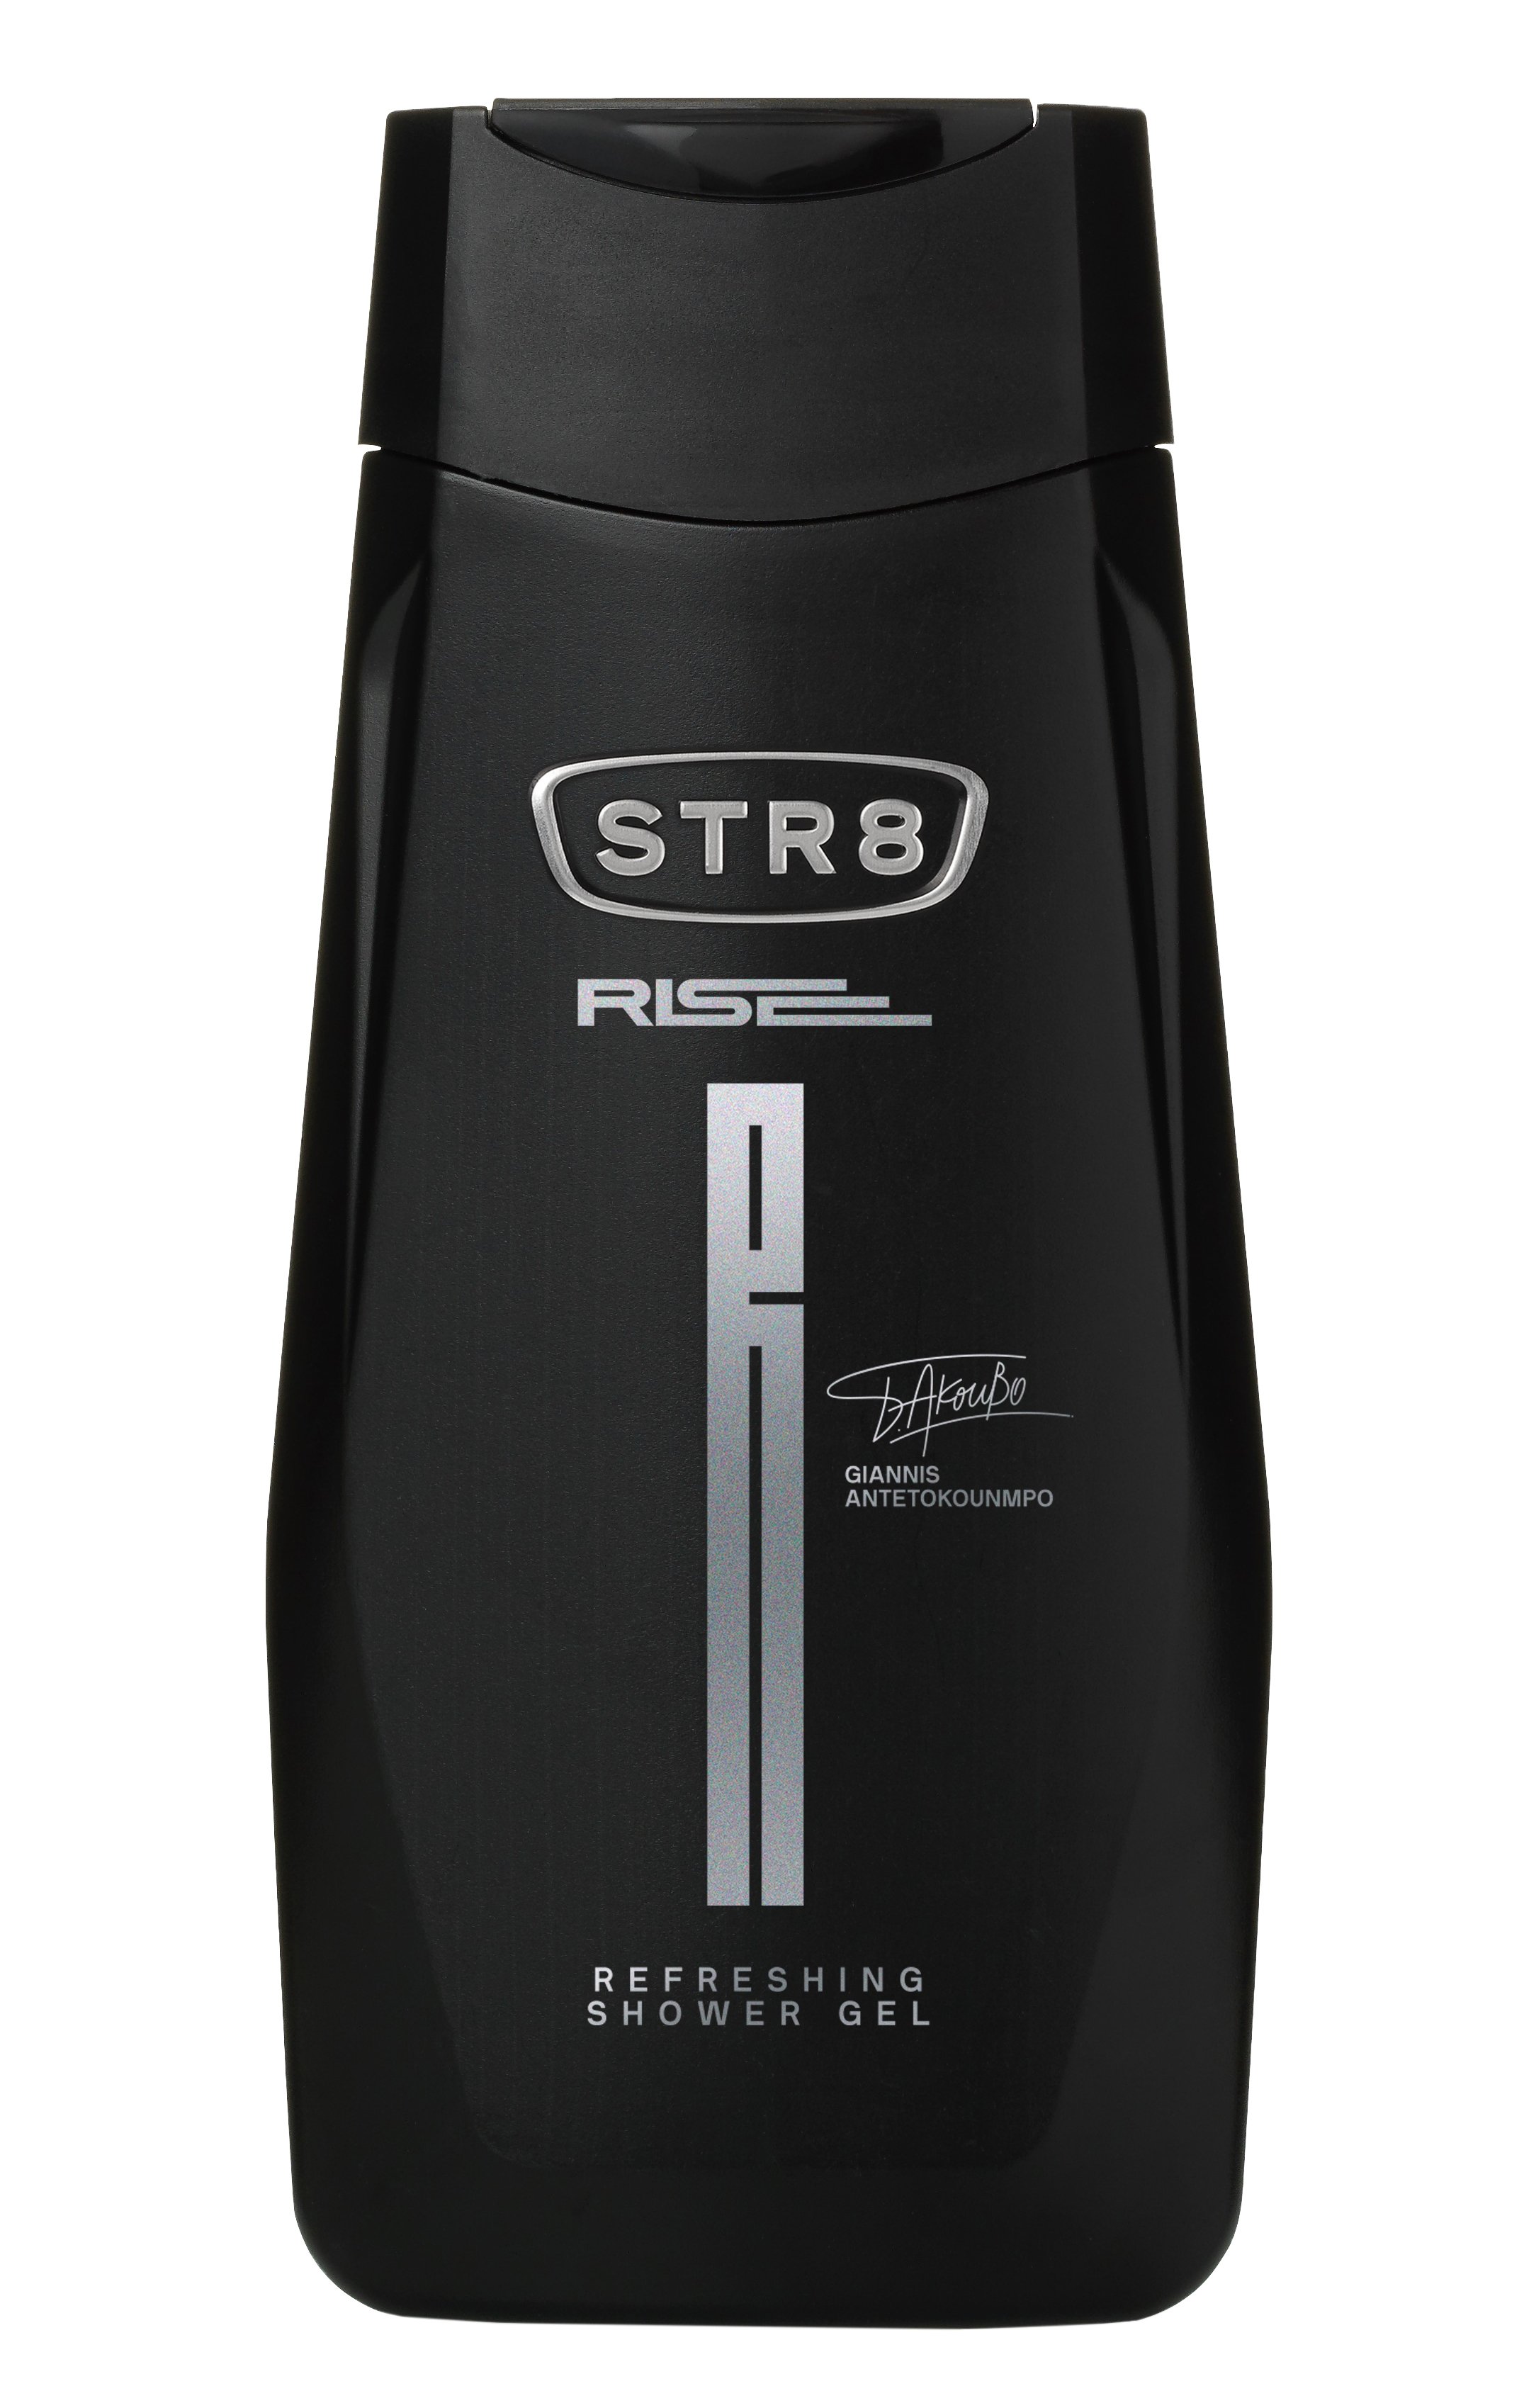 Гель для душа STR8 Rise, 250 мл - фото 1